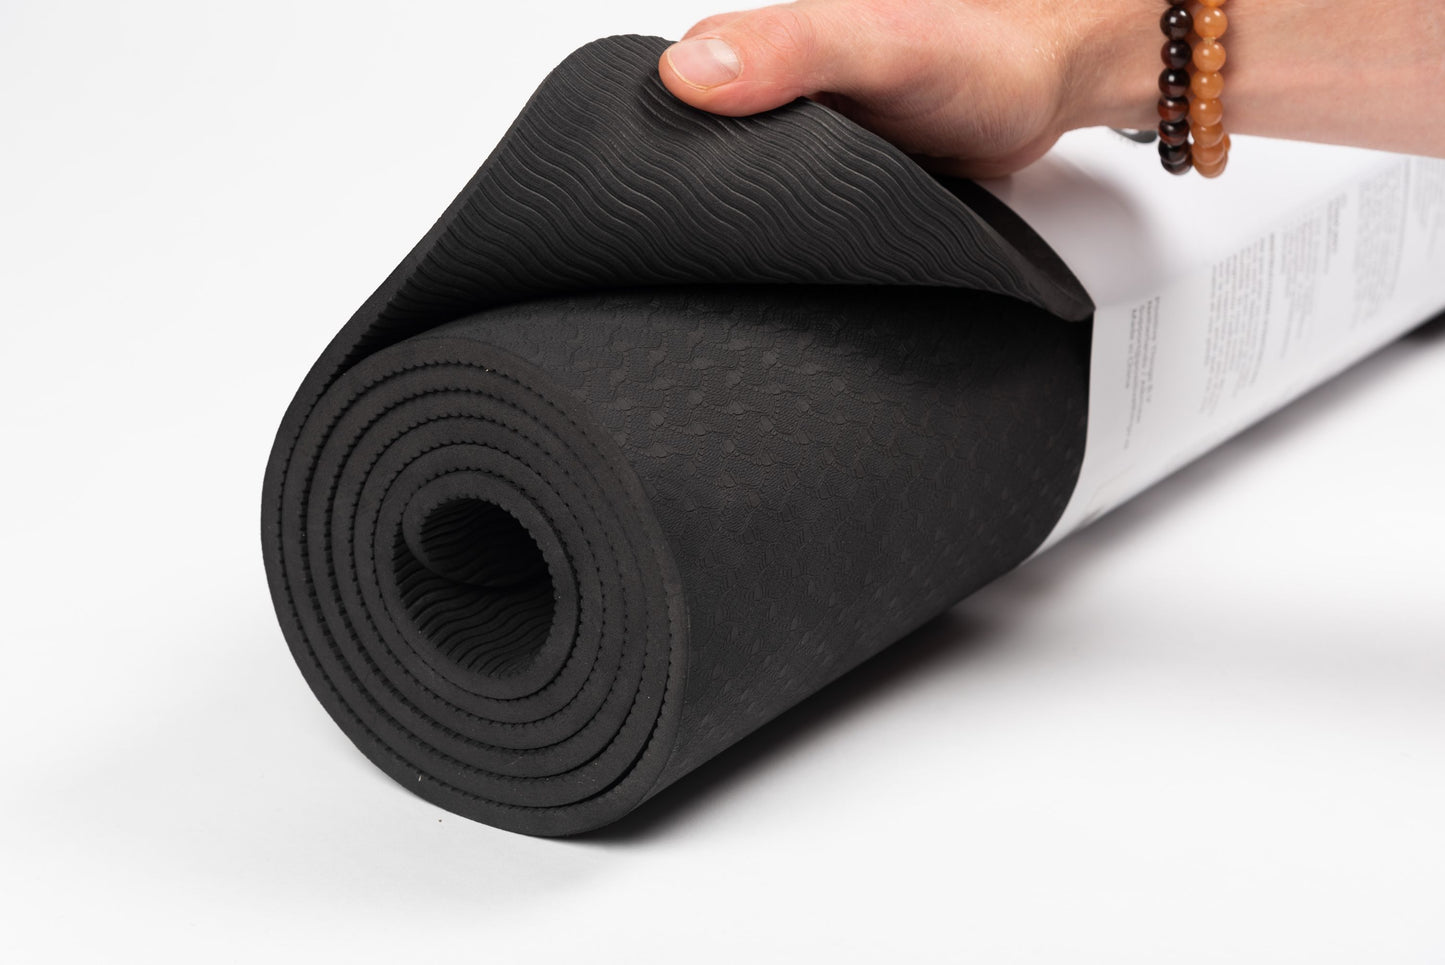 Yogamat TPE met Antislip - Zwart